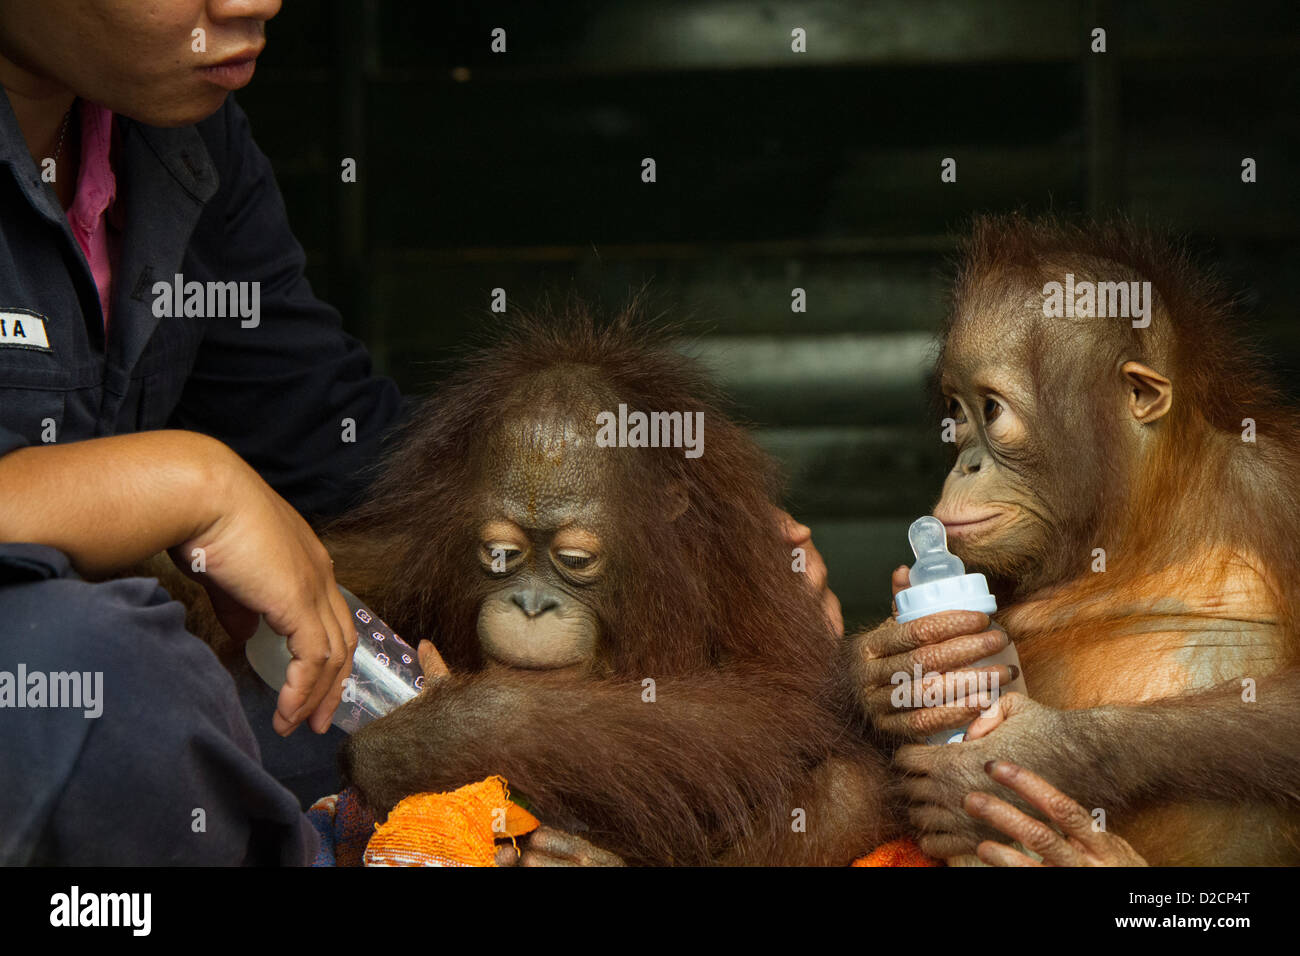 Orangutan (Pongo pygmaeus) caretaker bottle-feeding two infants, Orangutan Care Center, Borneo, Indonesia Stock Photo